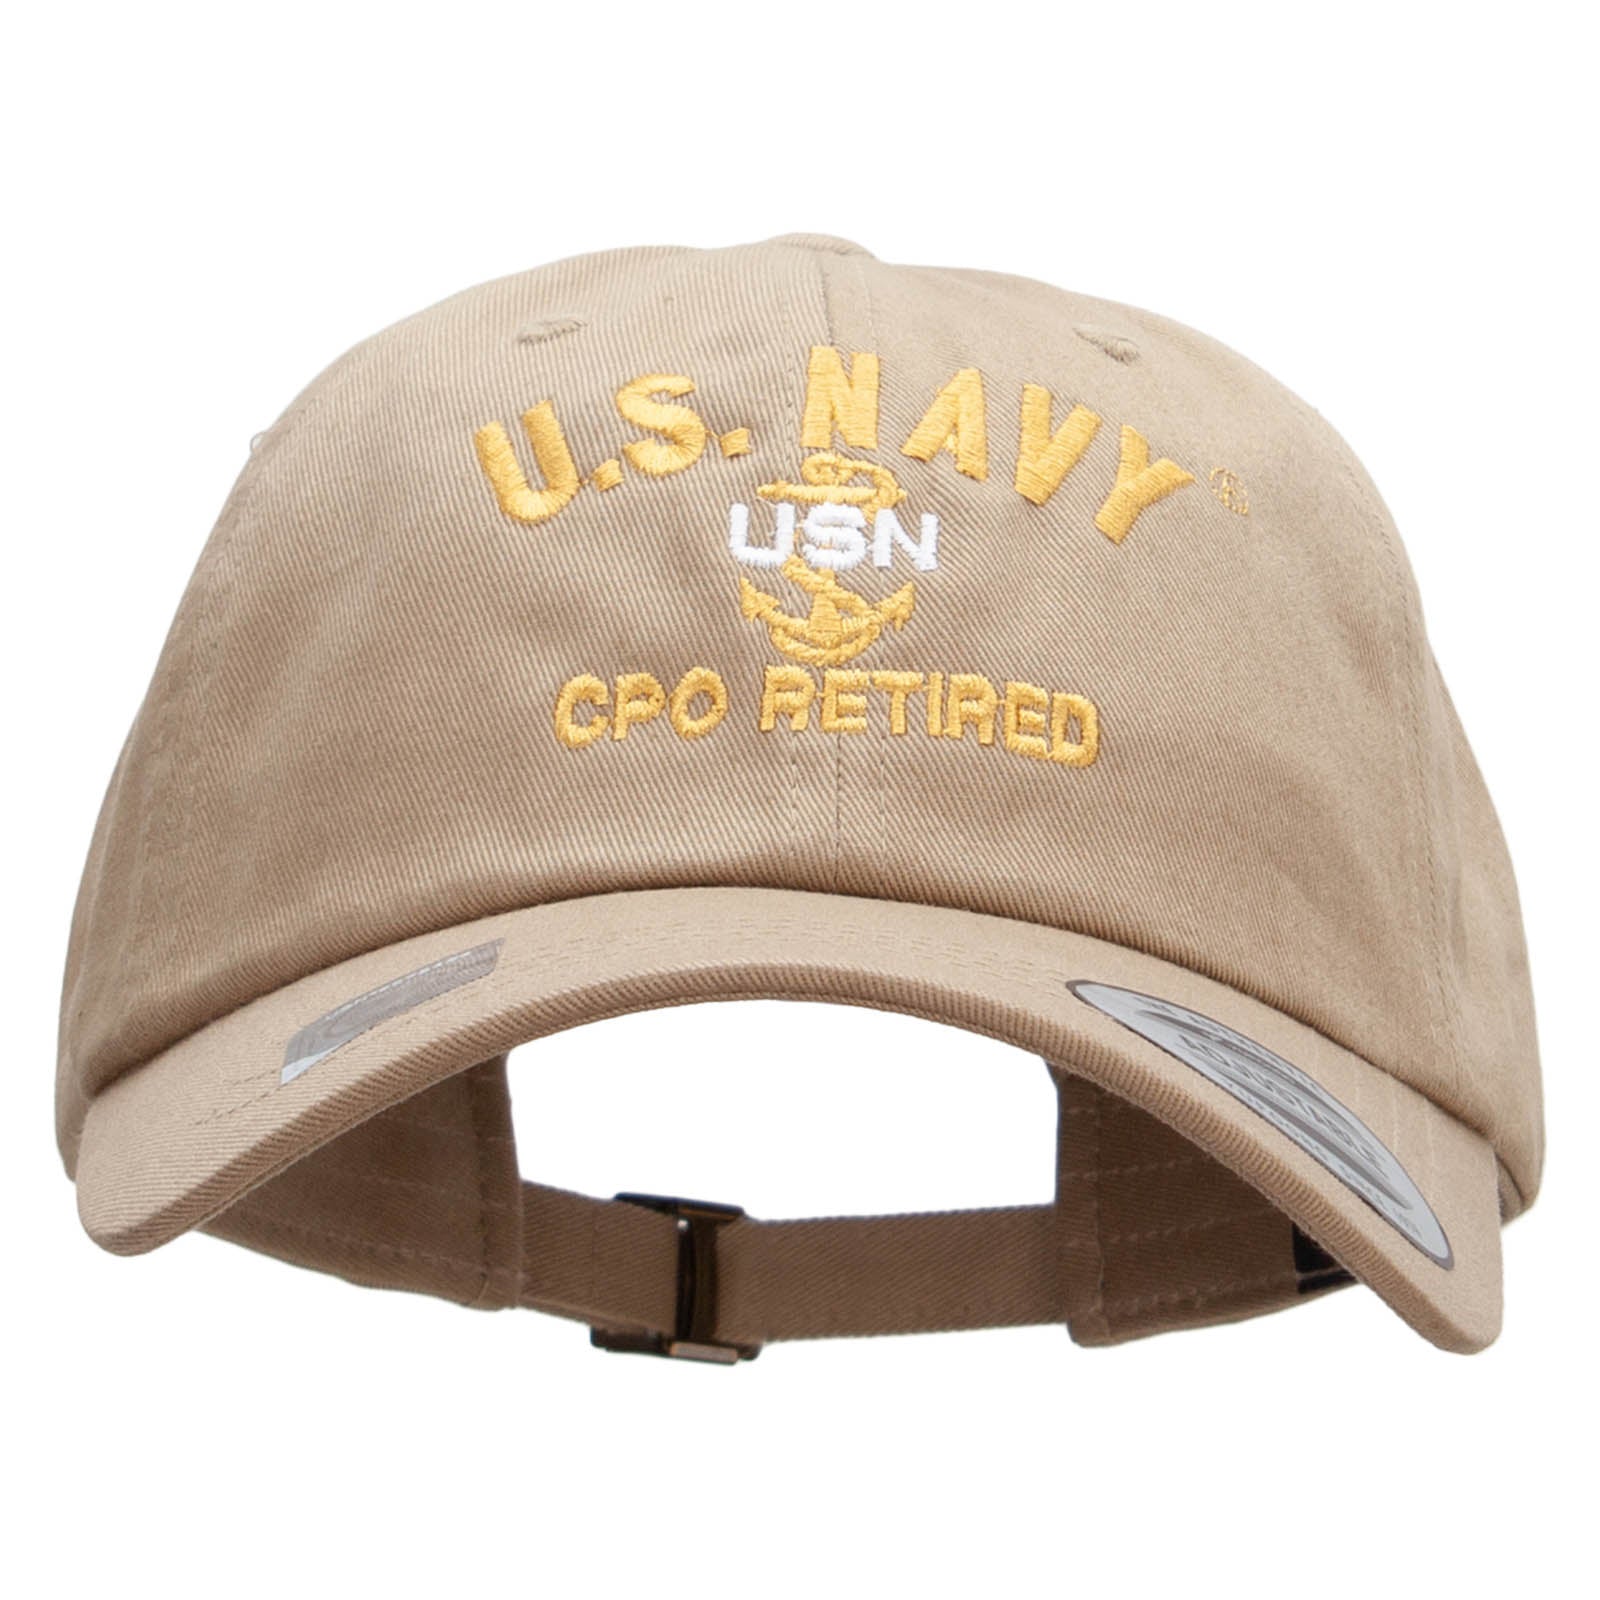 Licensed US Navy USN CPO Retired Unstructured Low Profile 6 panel Cotton Cap - Khaki OSFM